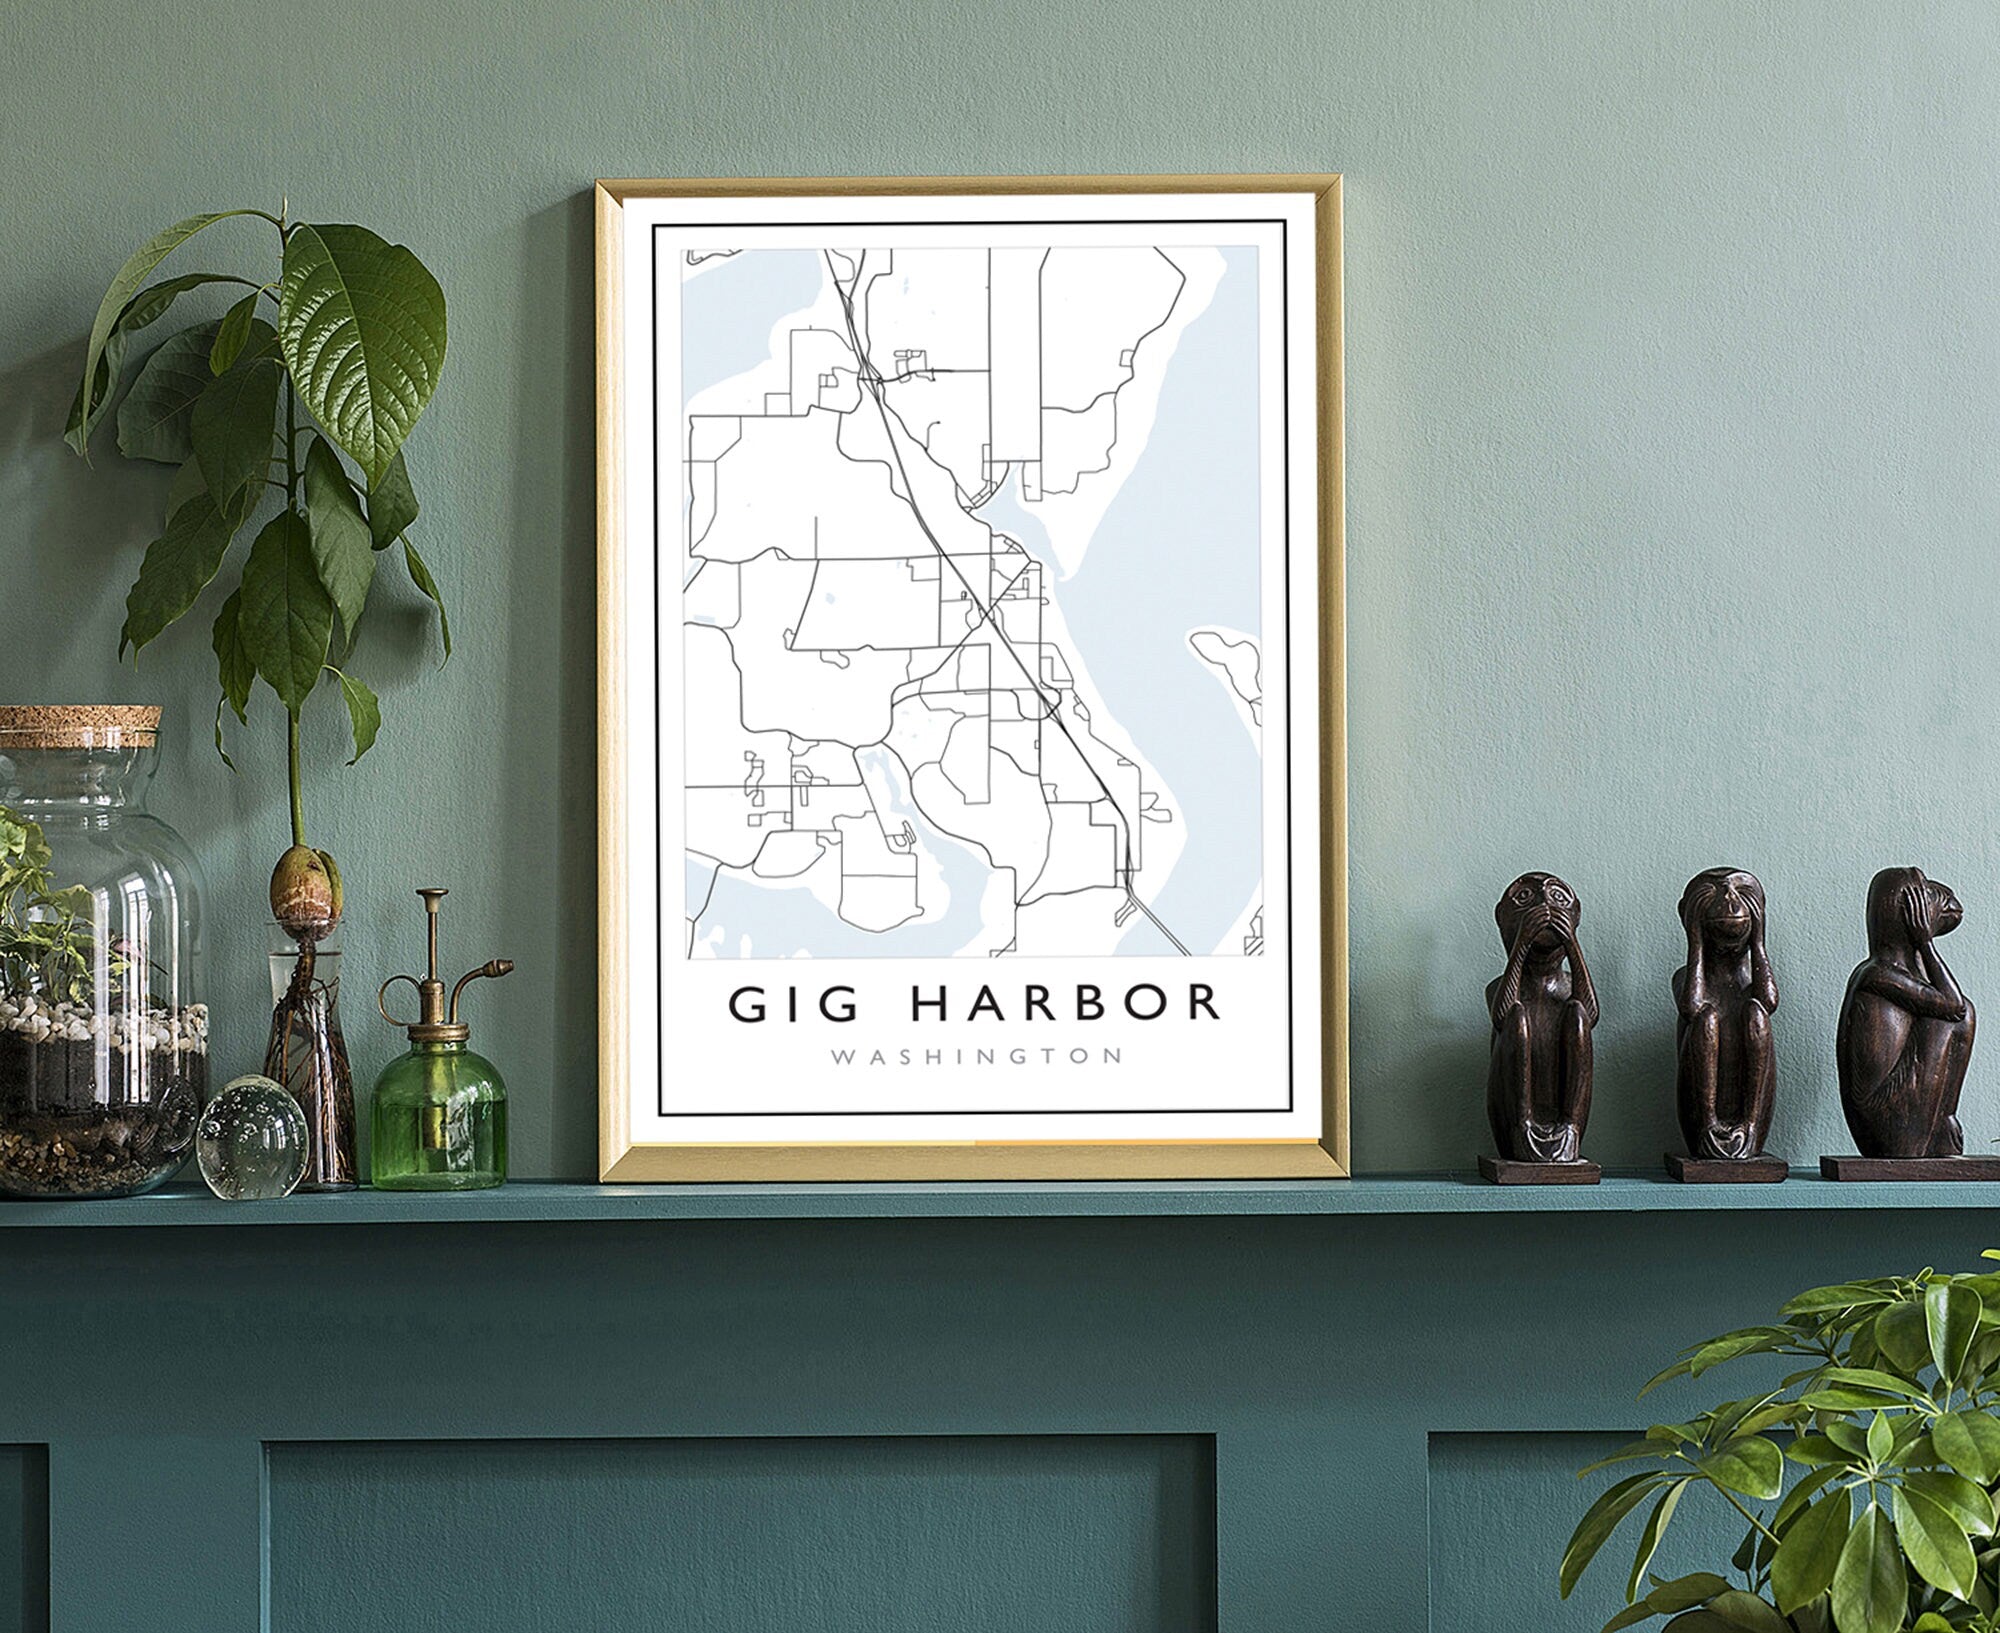 Gig Harbor Washington City Map, Washington City Road Map Poster, City Street Map Print, Modern US City Map, Home Art Decor, Office Wall Art